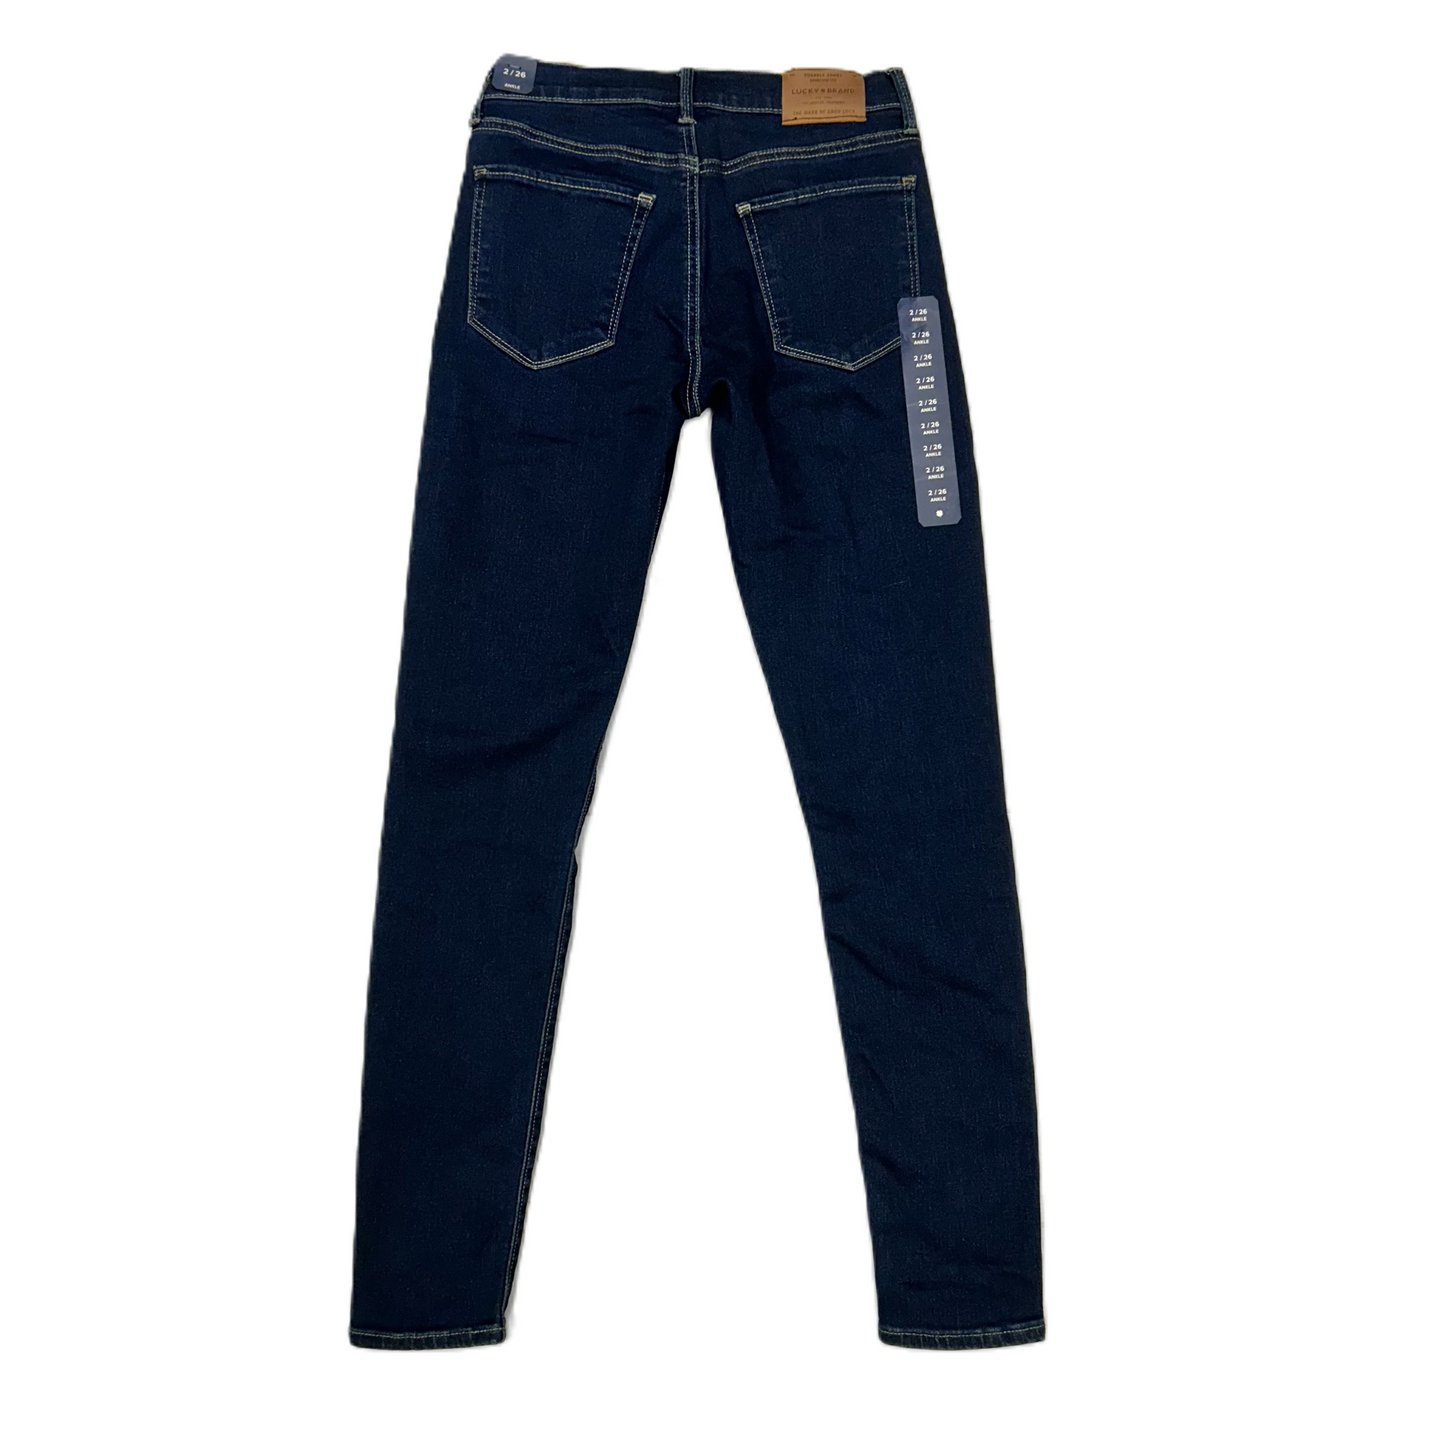 Blue Denim Jeans Skinny By Lucky Brand, Size: 2